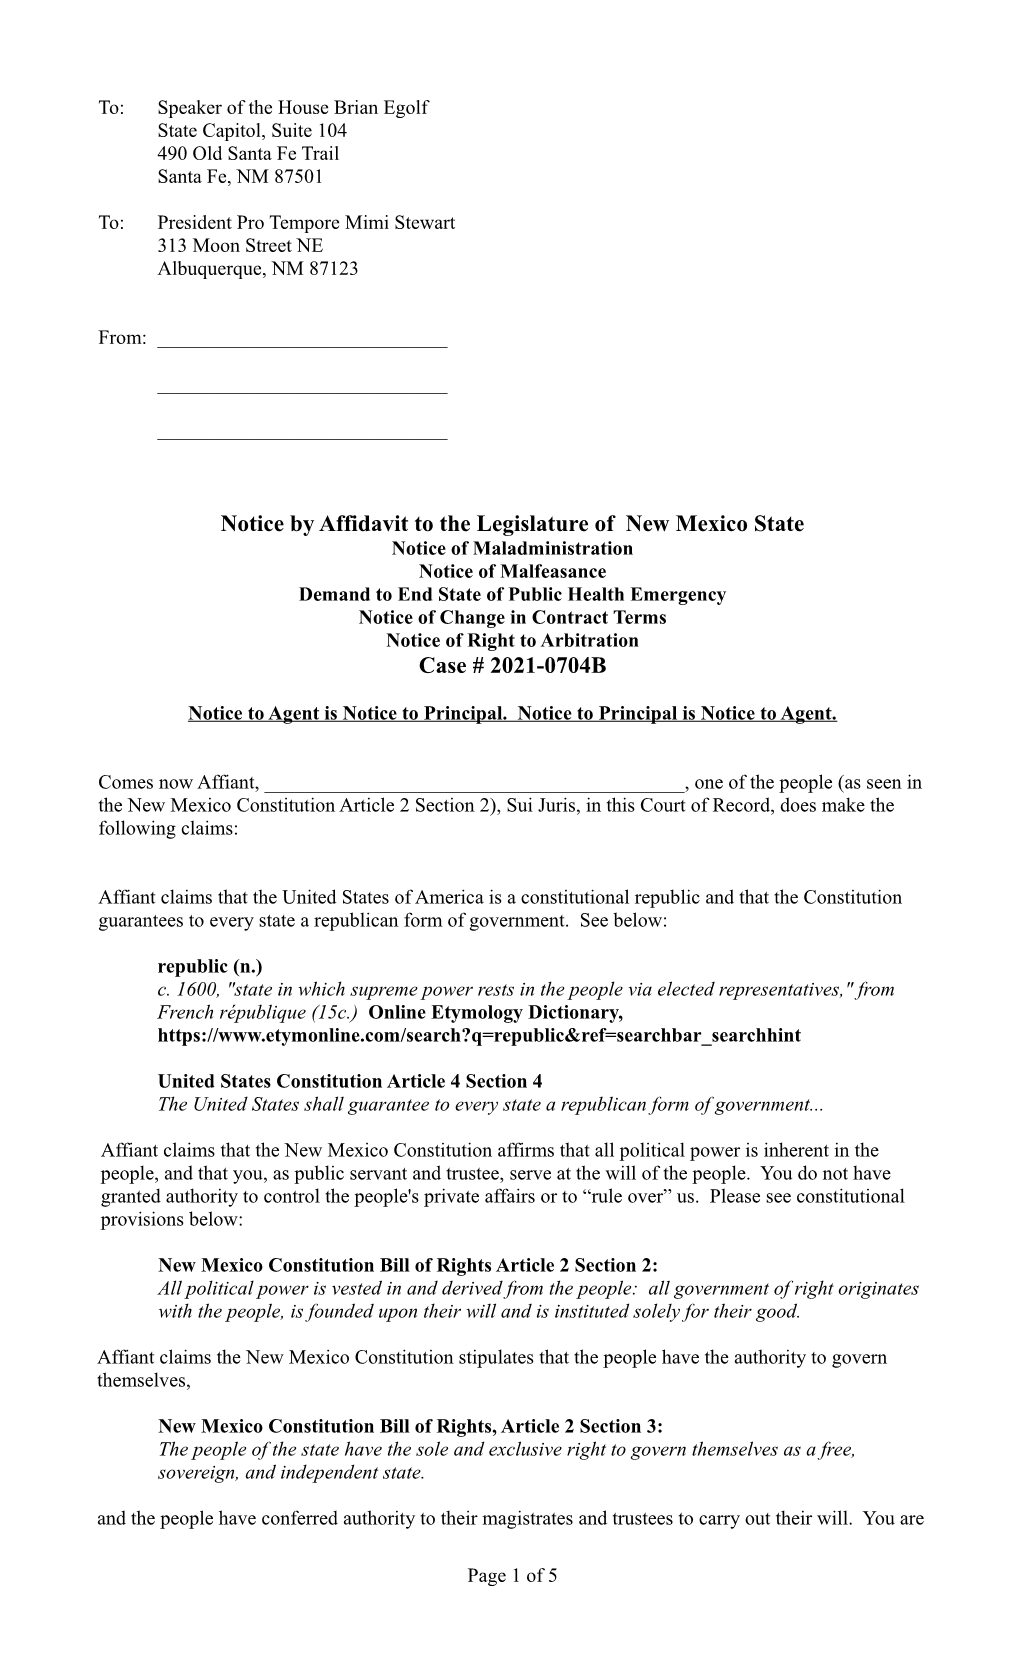 Affidavit NM Legislature Final